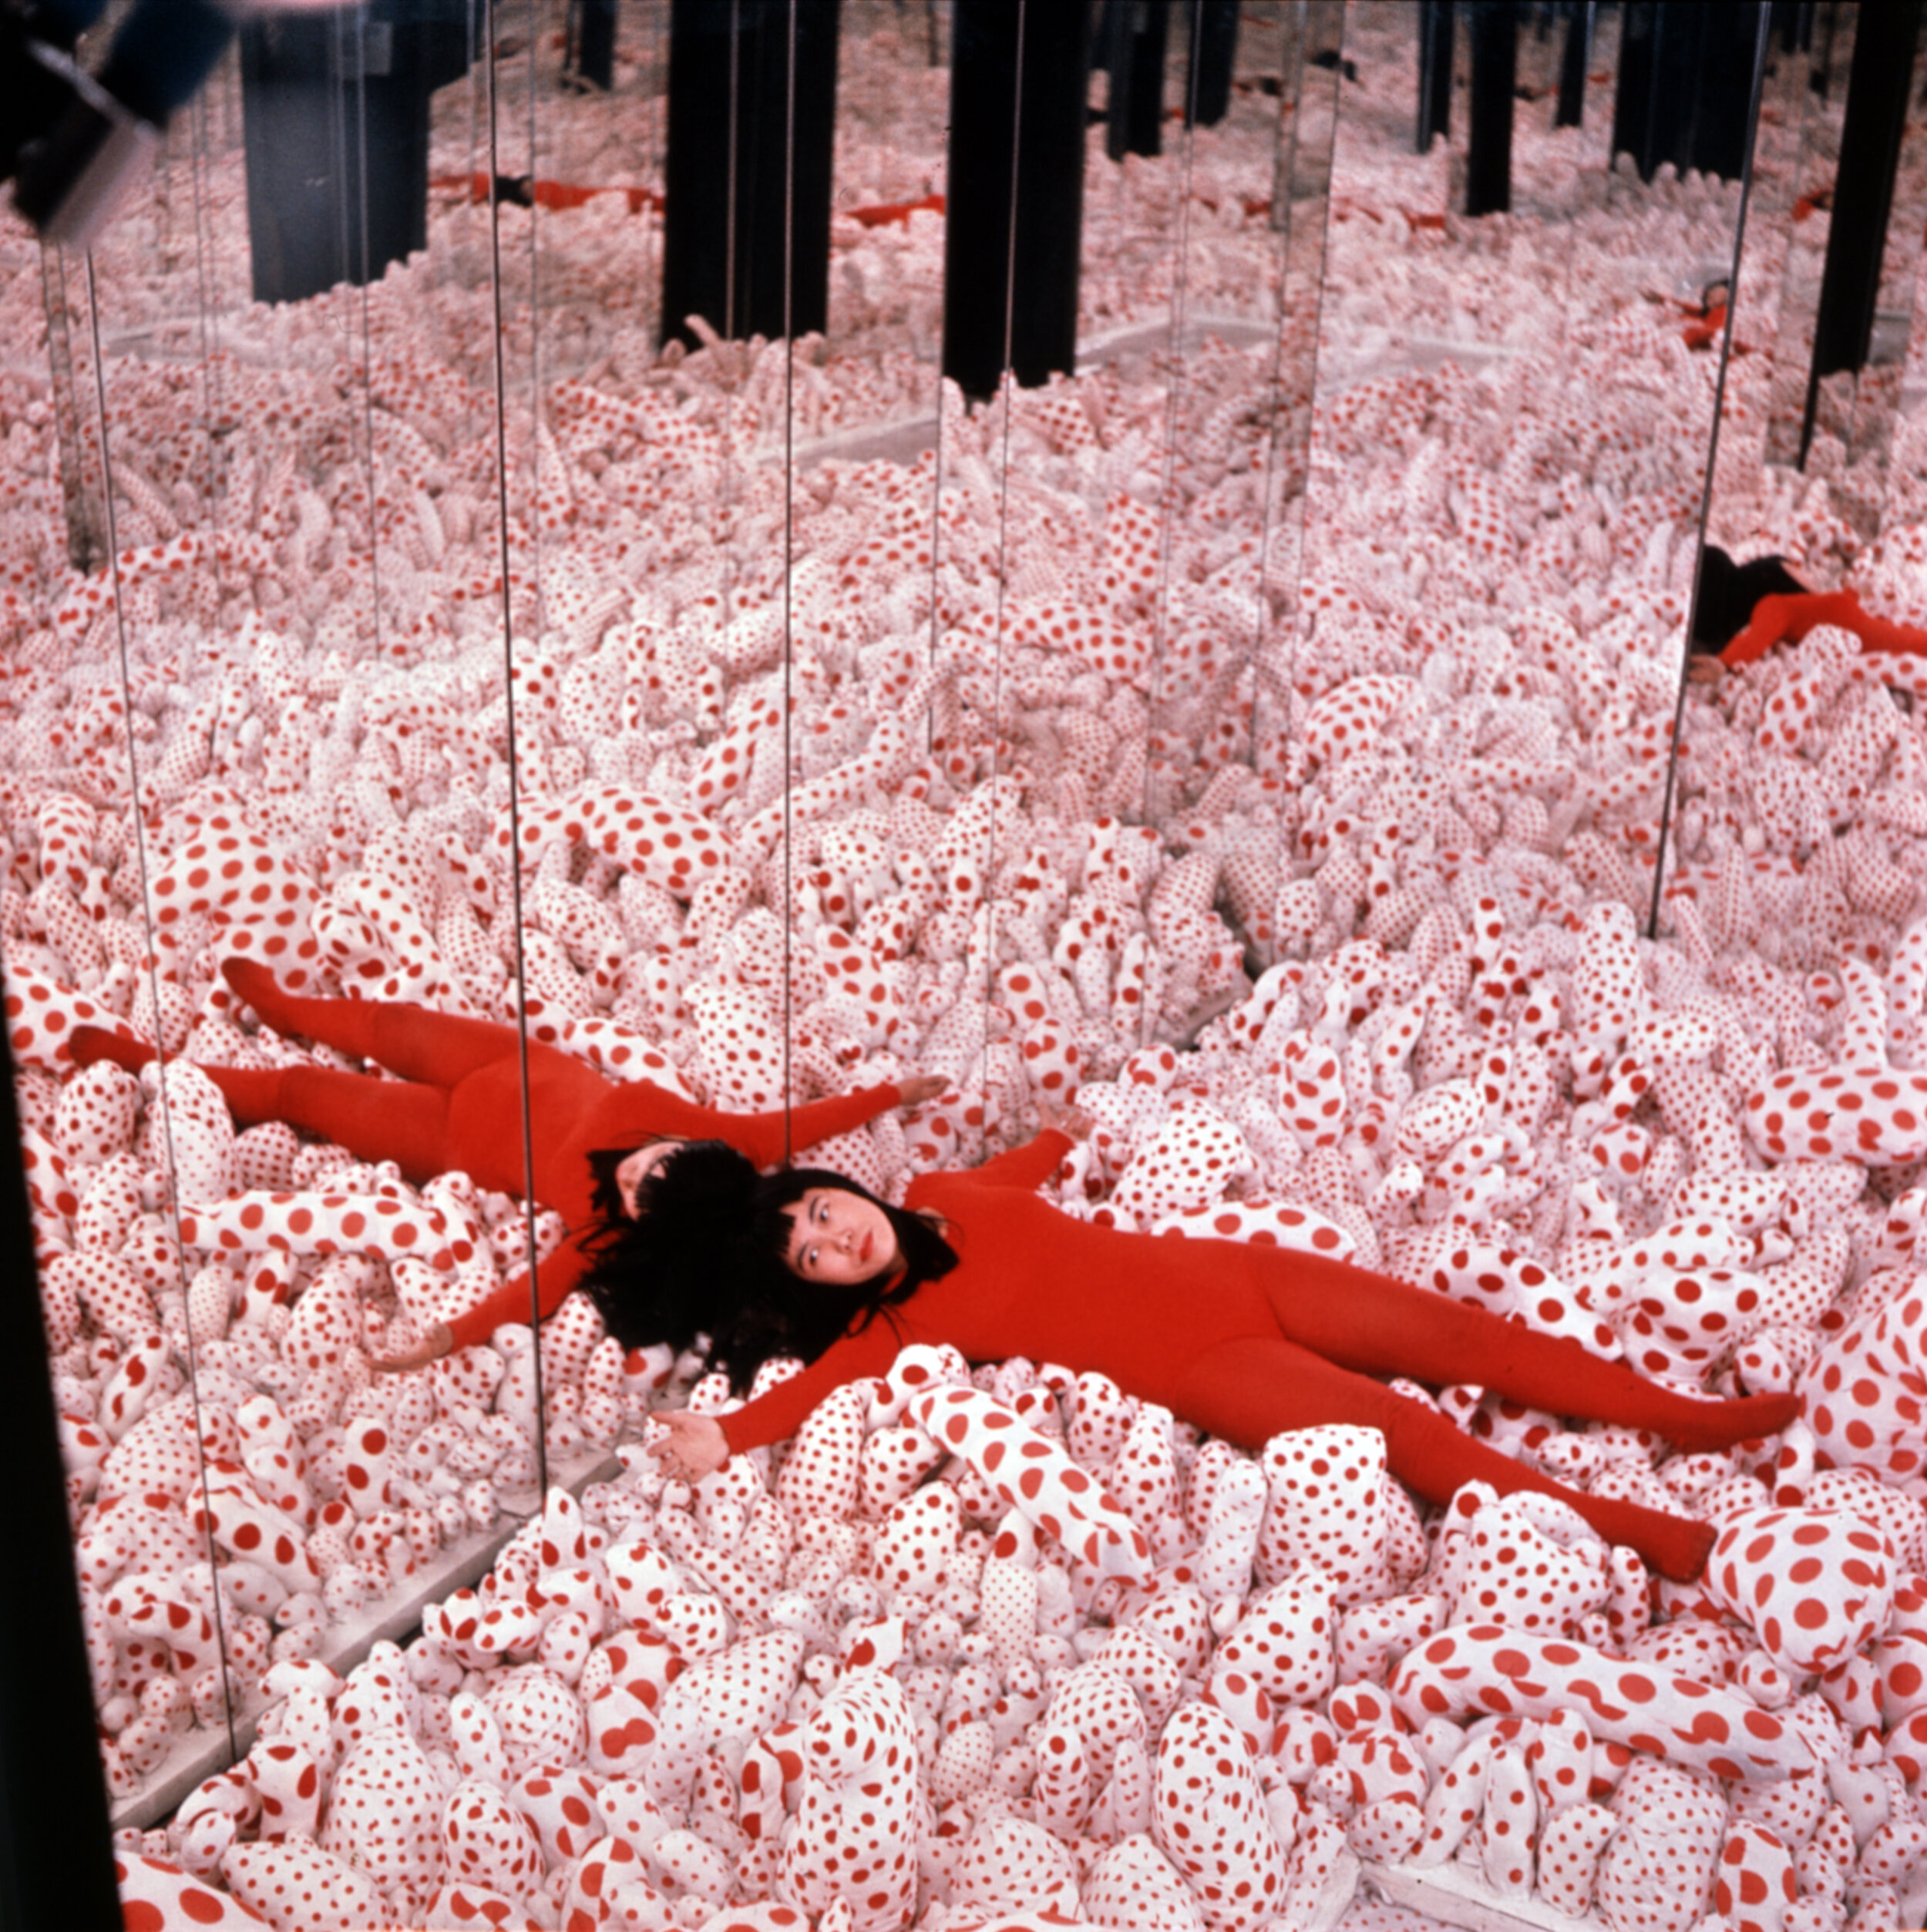 Installation-view-of-Yayoi-Kusama’s-first-–-Infinity-Mirror-Room—Phalli’s-Field-1965-Sewn-stuffed-cotton-fabric-board-and-mirrors-in-Floor-Show-Castellane-Gallery-New-York-1965-.jpg